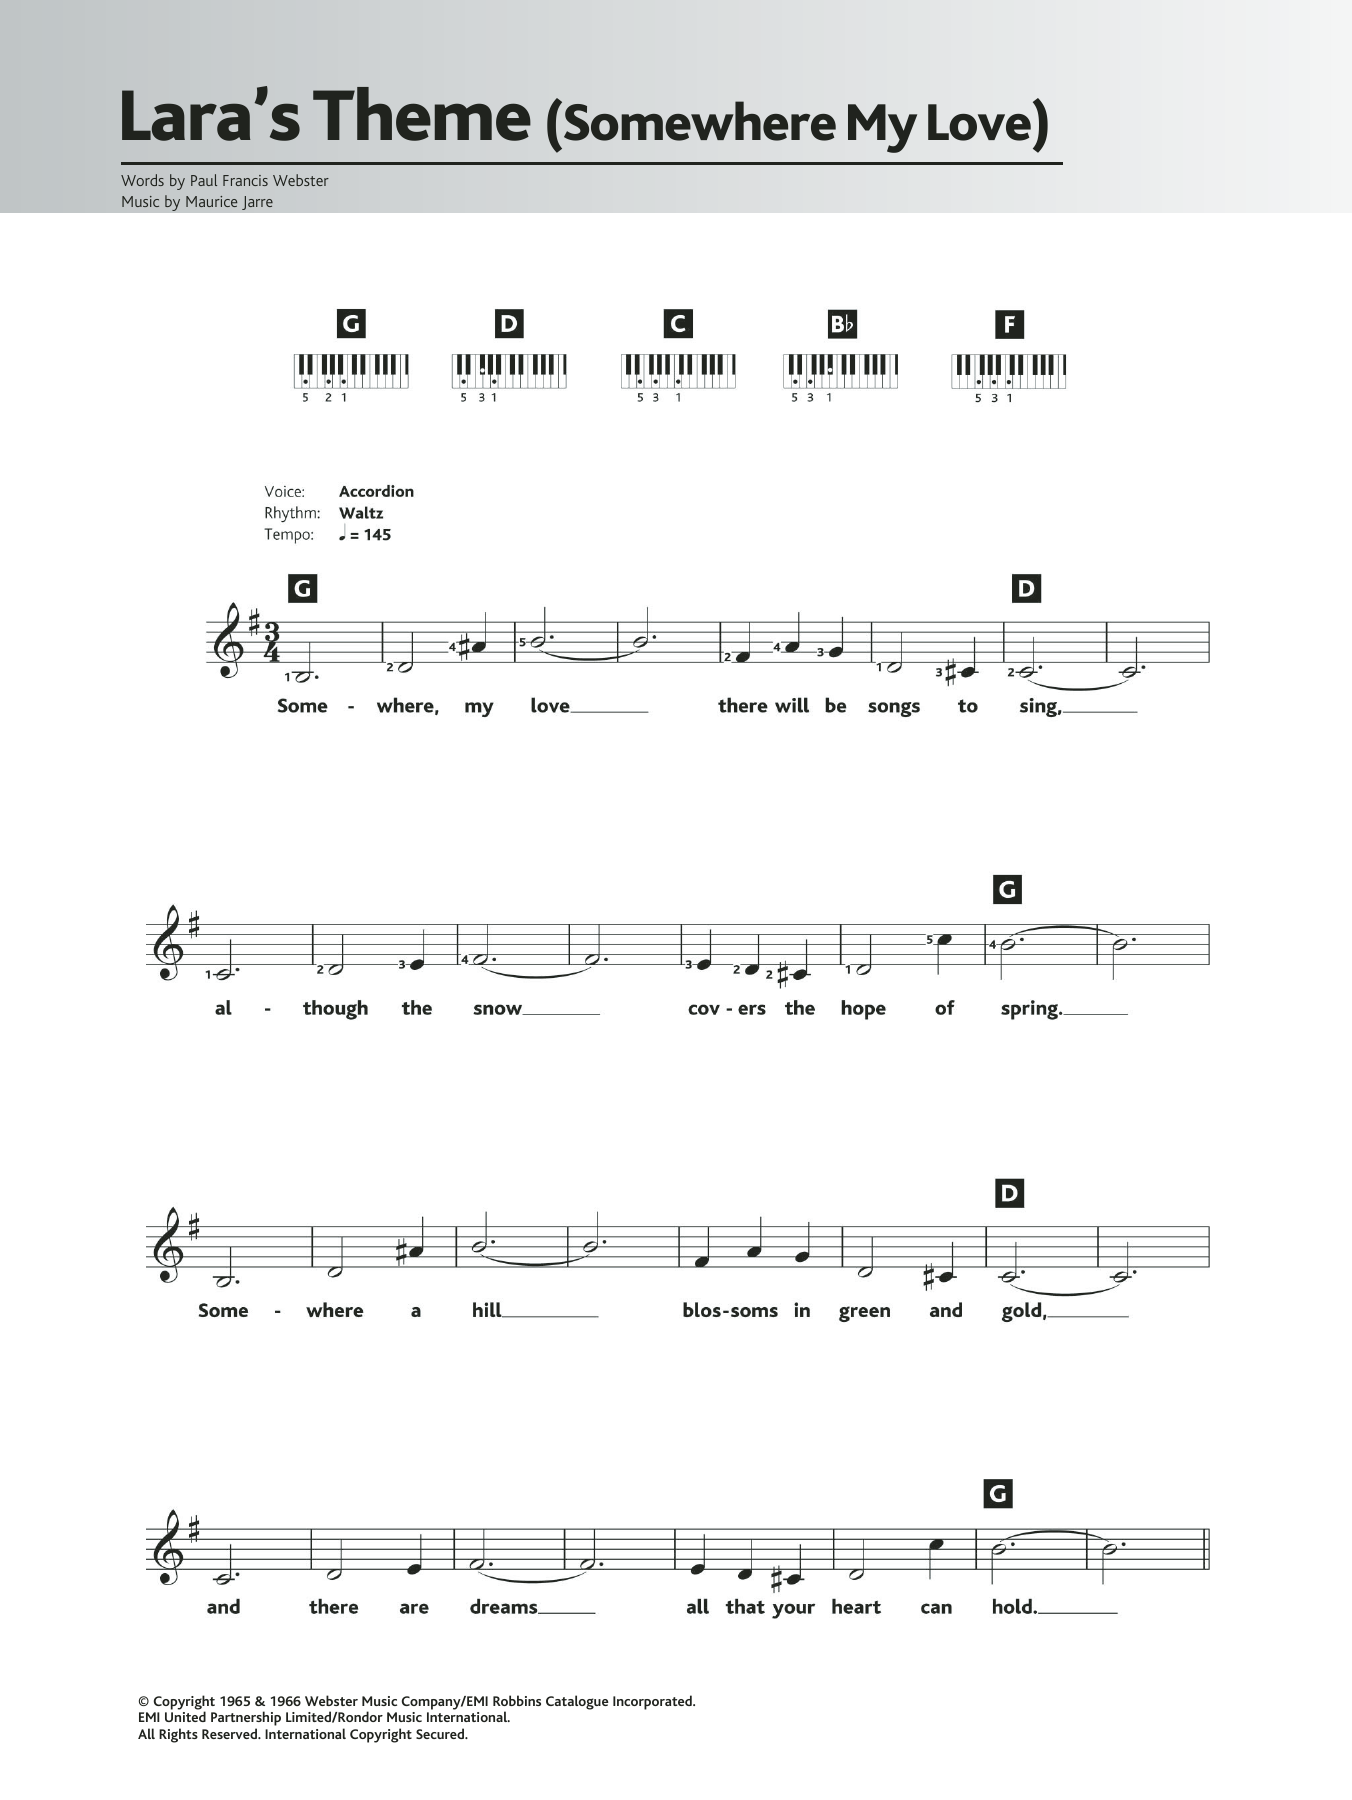 Maurice Jarre Somewhere My Love (Lara's Theme) Sheet Music Notes & Chords for Piano Chords/Lyrics - Download or Print PDF